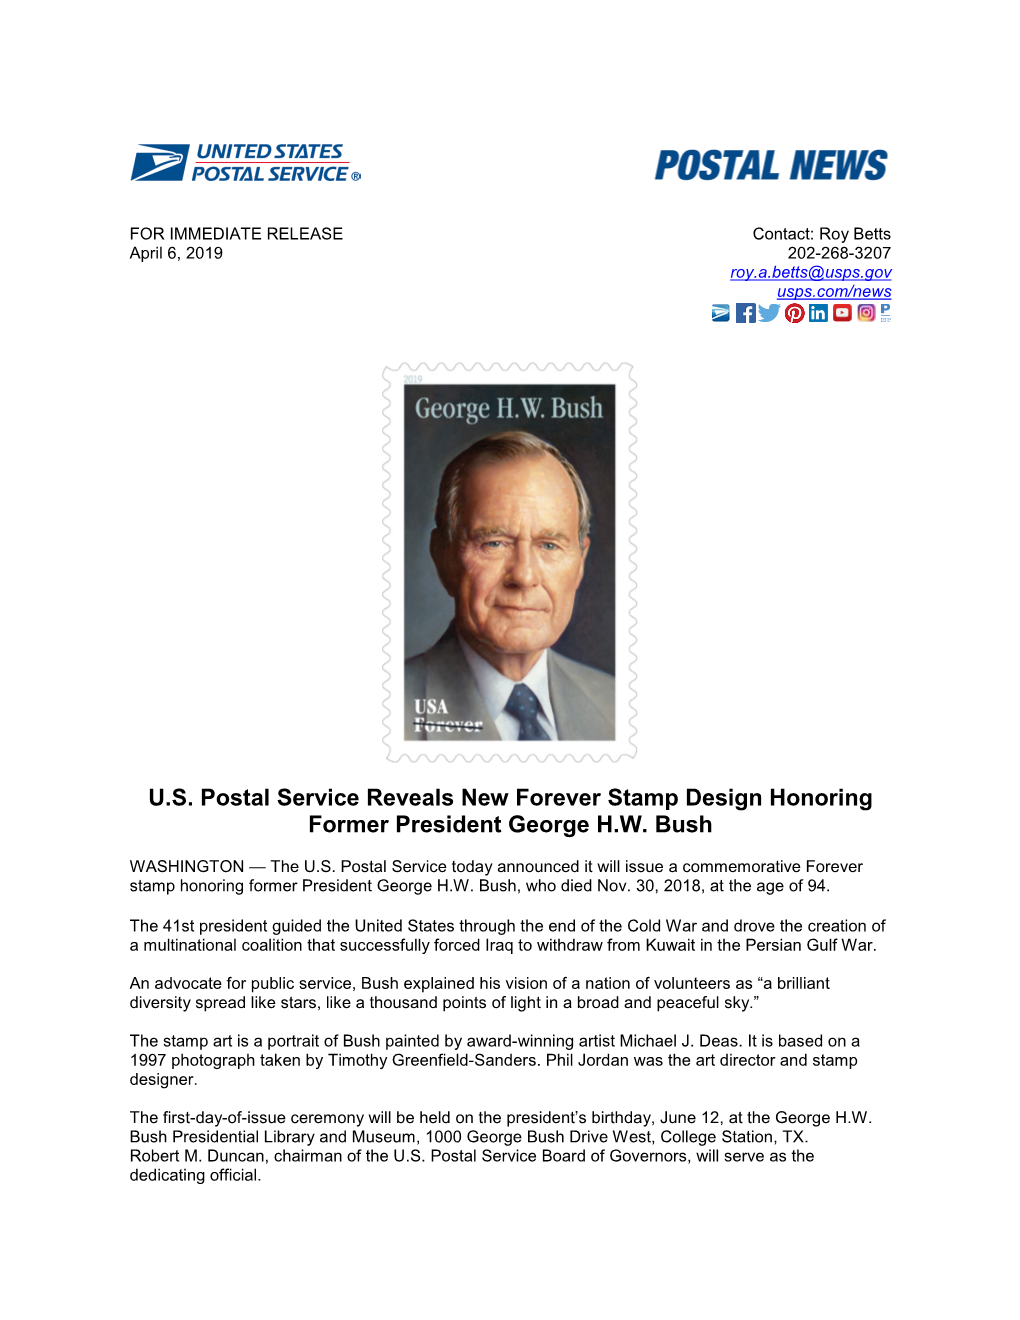 U.S. Postal Service Reveals New Forever Stamp Design Honoring Former President George H.W